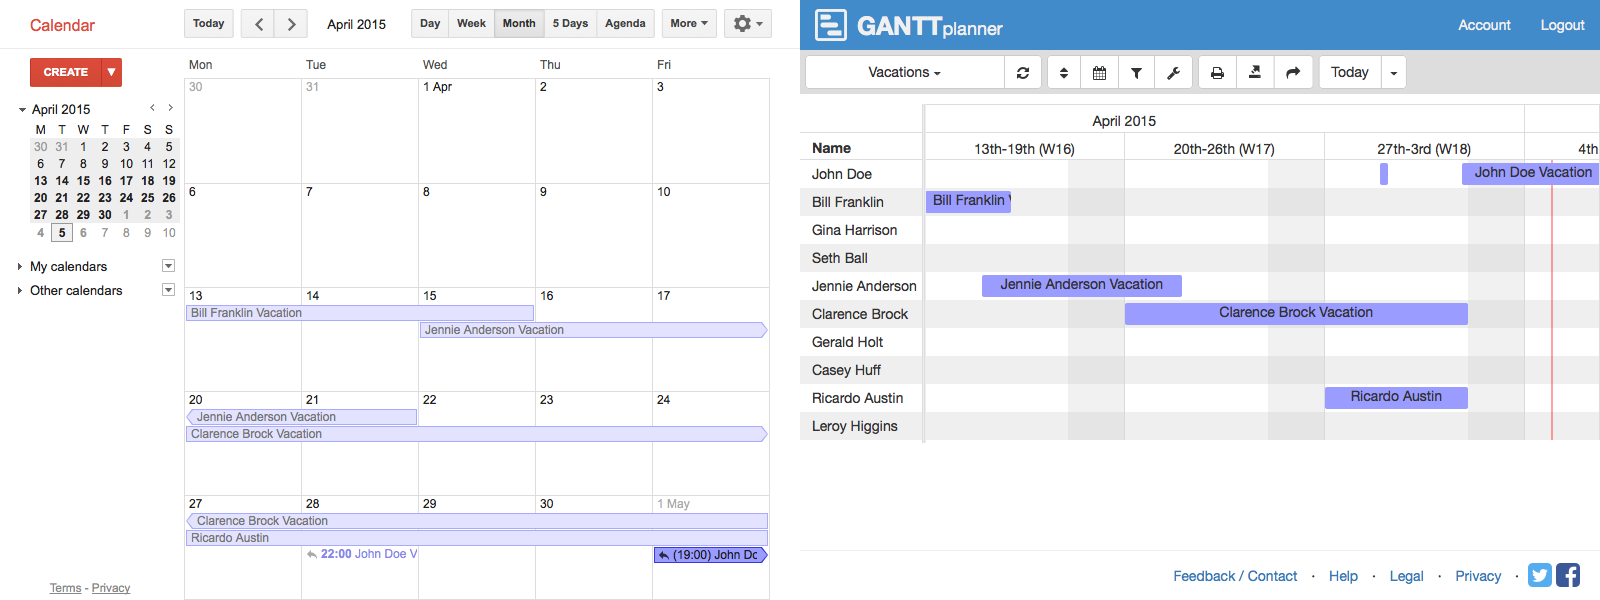 Calendar view in Google Calendar and in GANTTplanner